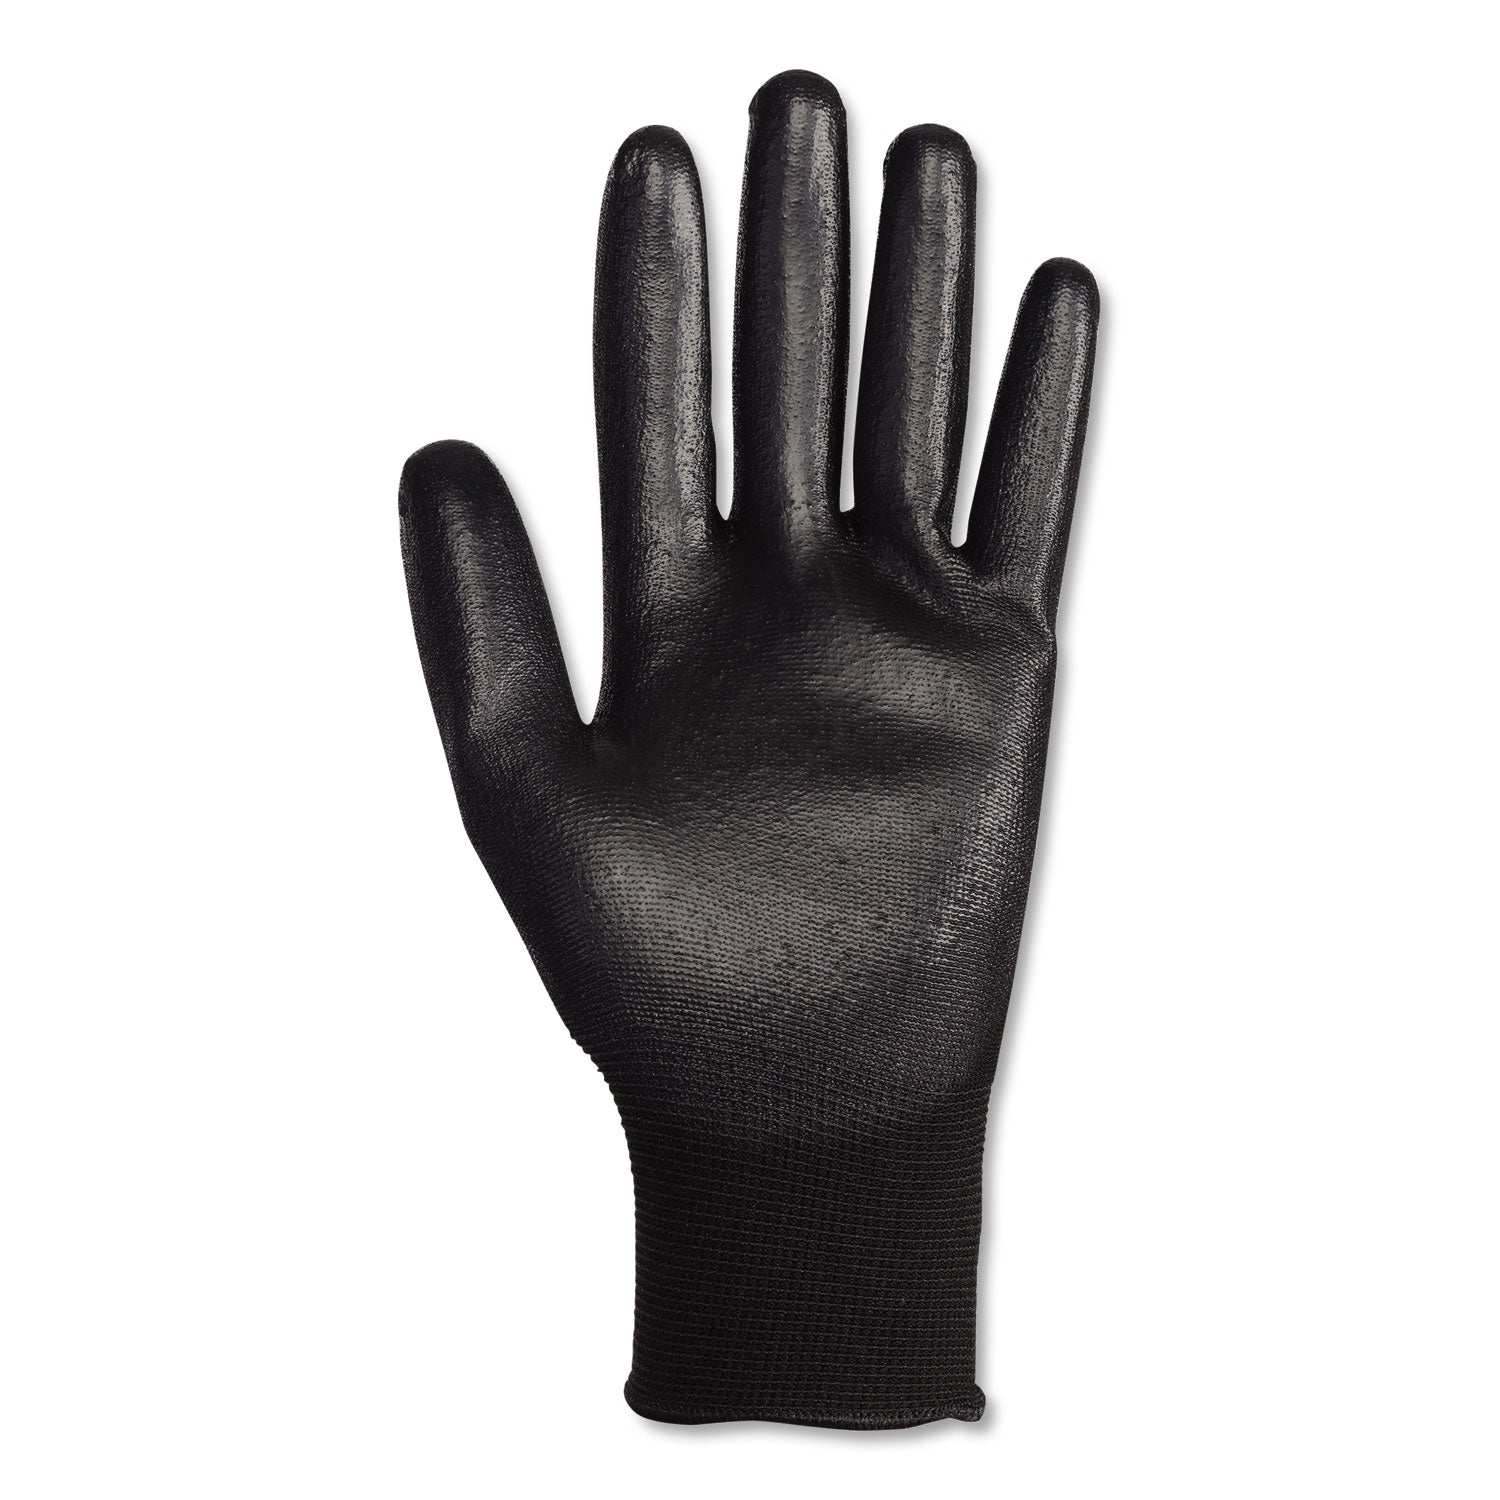 g40-polyurethane-coated-gloves-220-mm-length-small-black-60-pairs_kcc13837 - 2